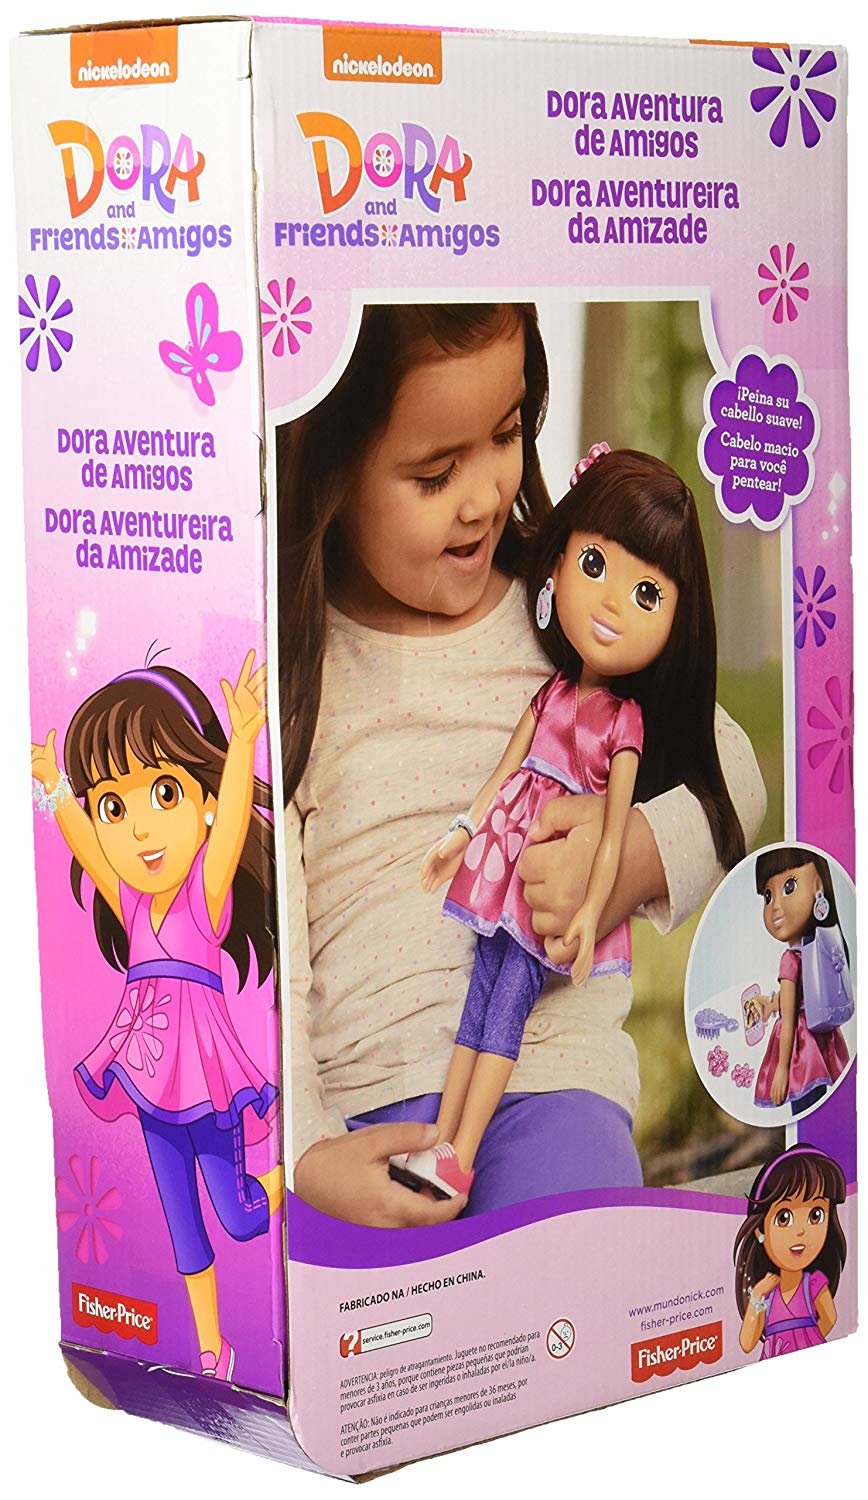 dora and friends dolls